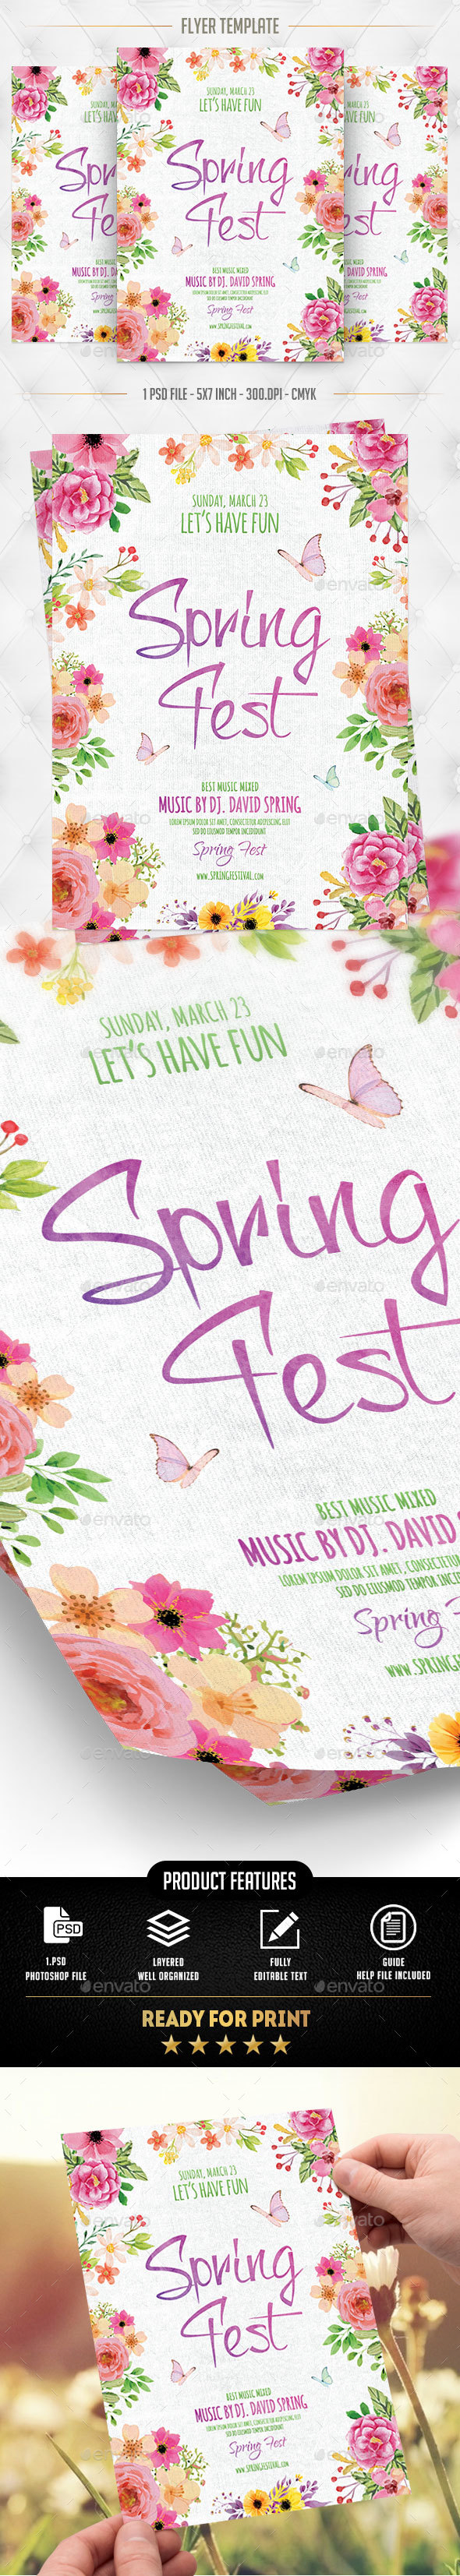 Spring Fest Flyer Template